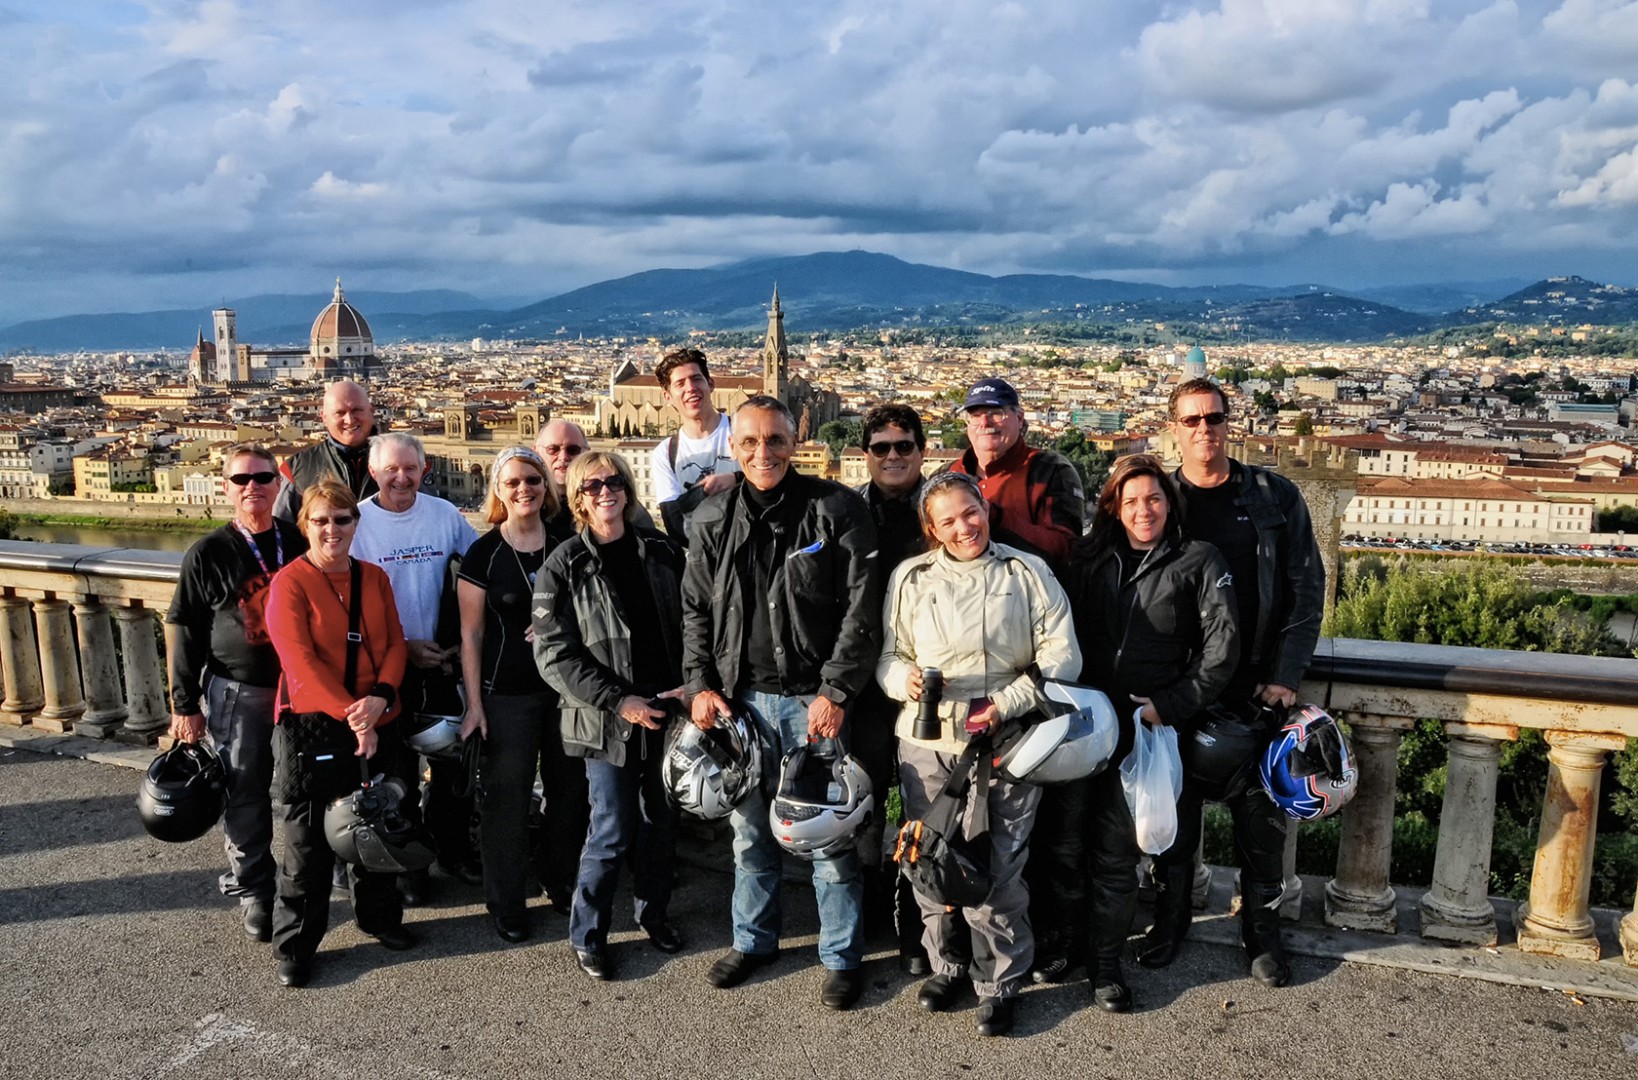 Tuscany Sardinia Corsica Motorcycle Tour